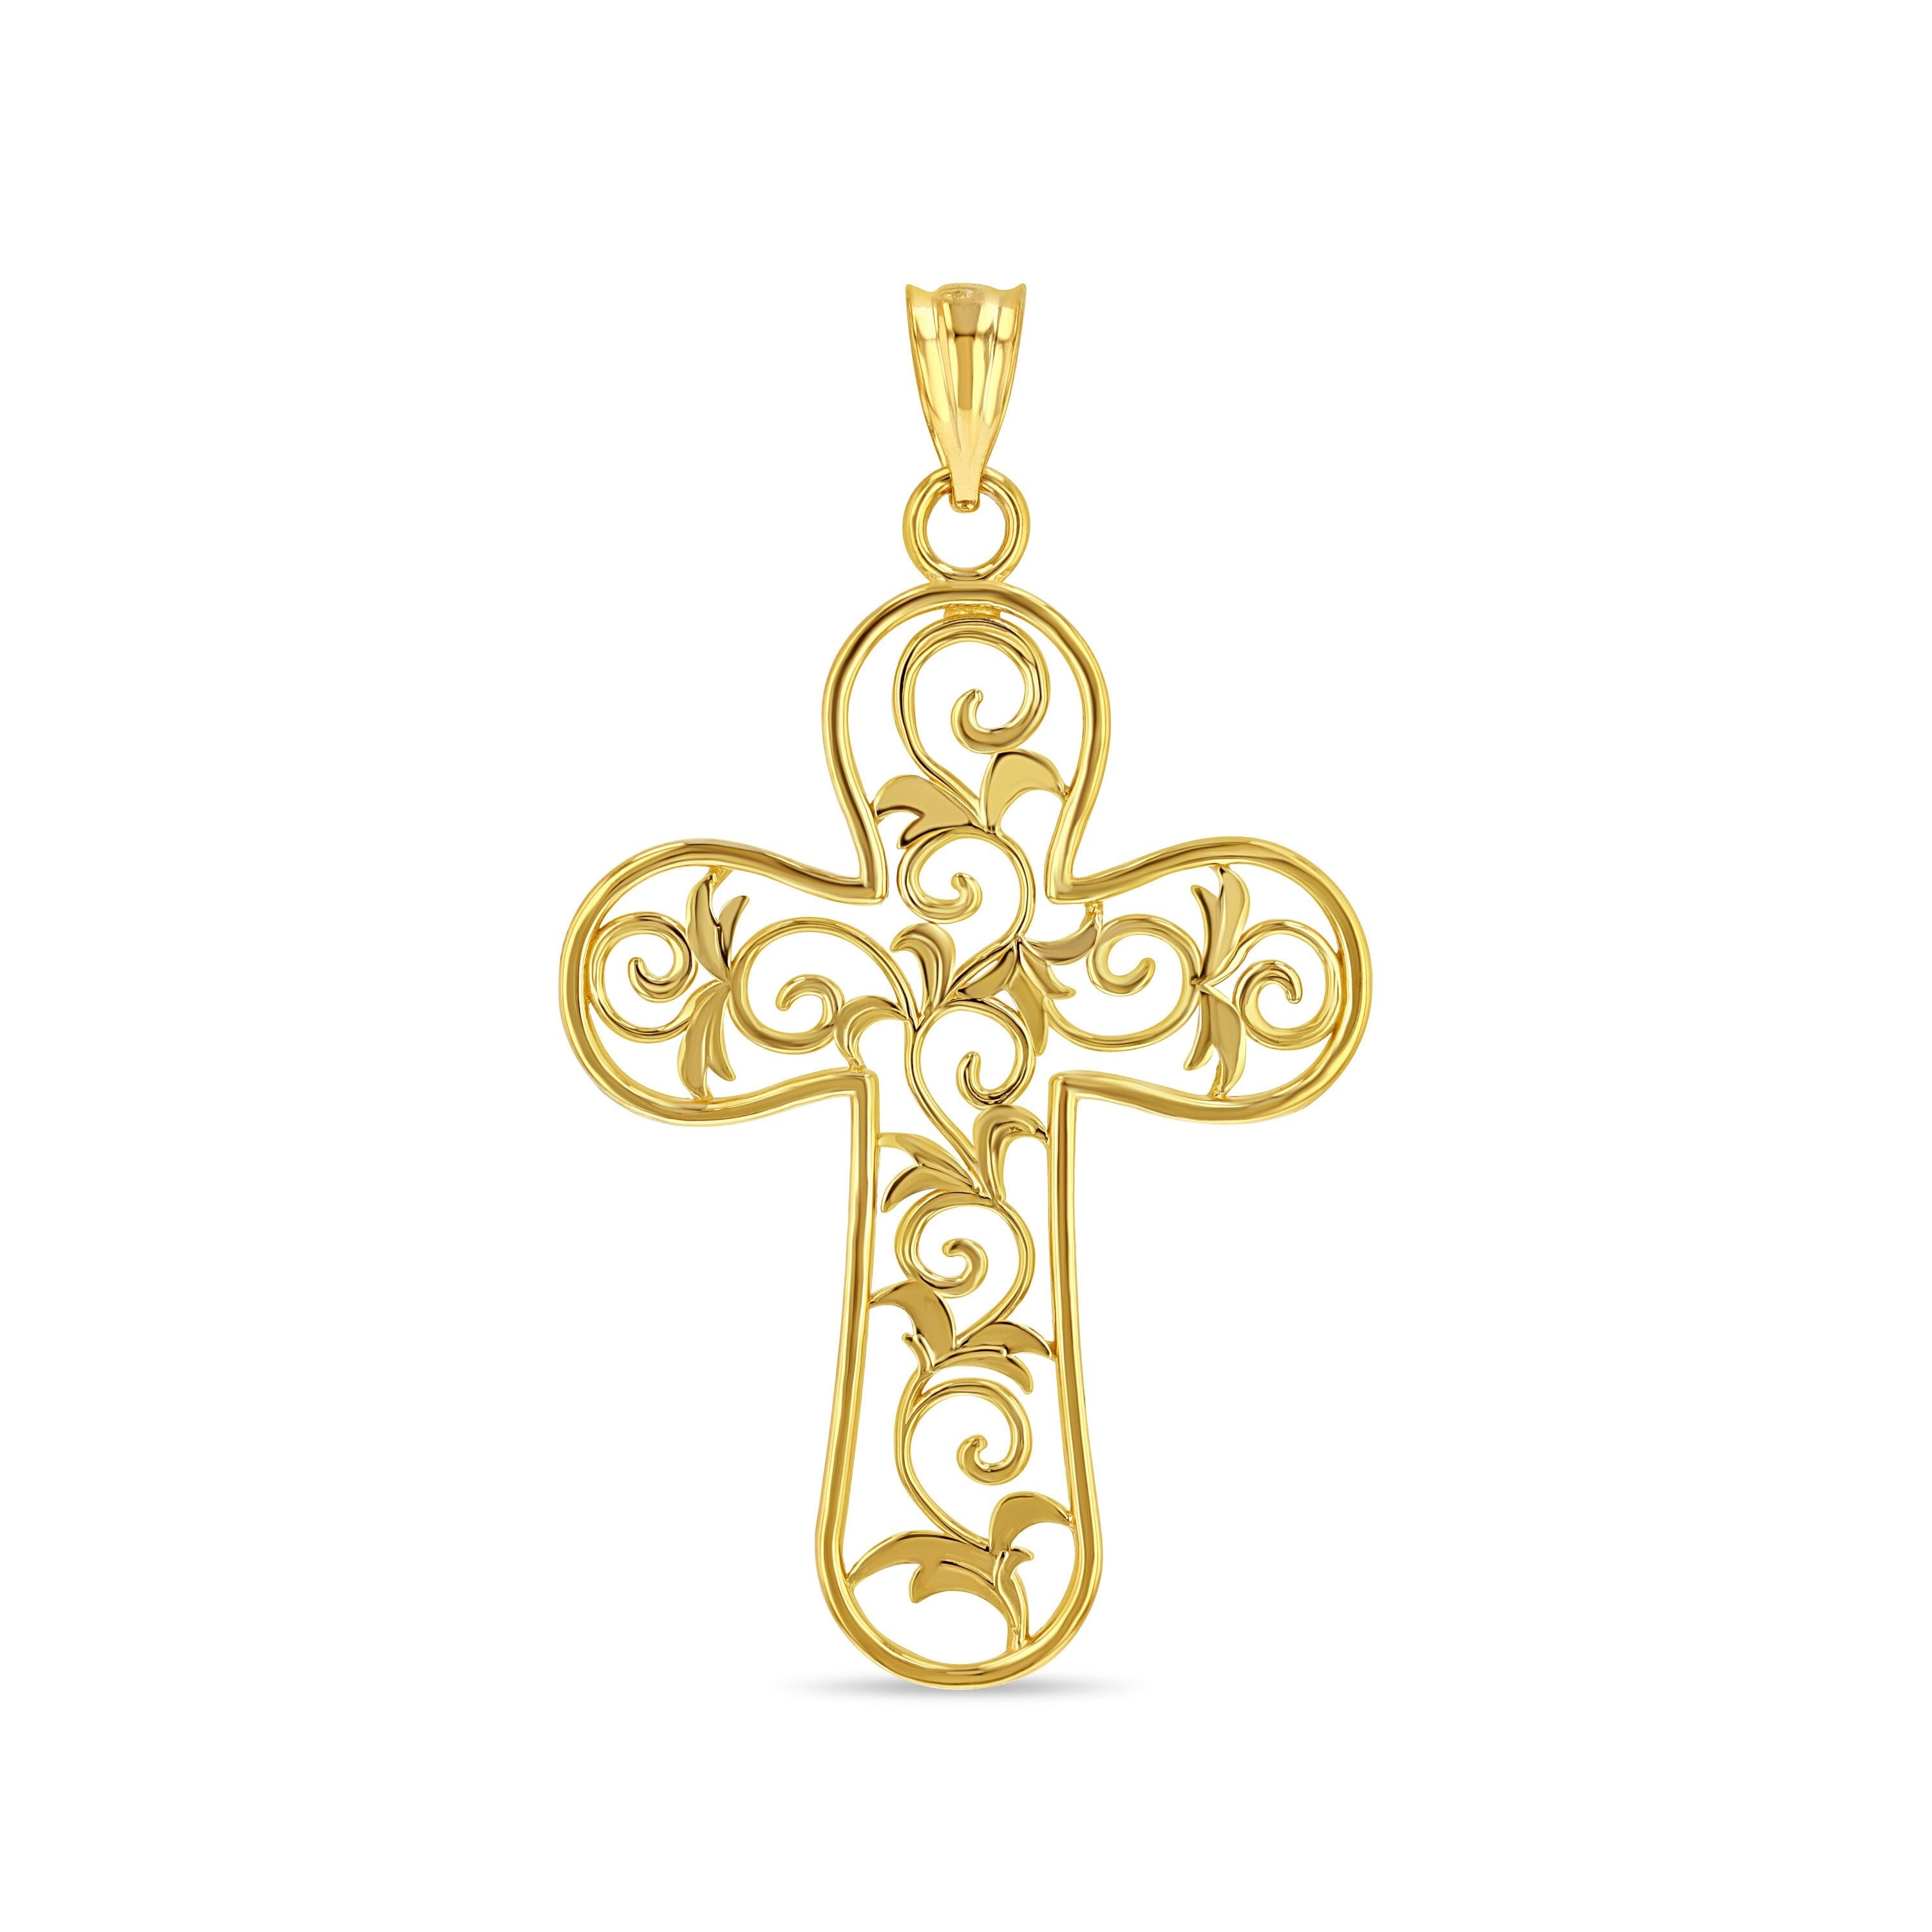 14k solid gold cross pendant with swirls design